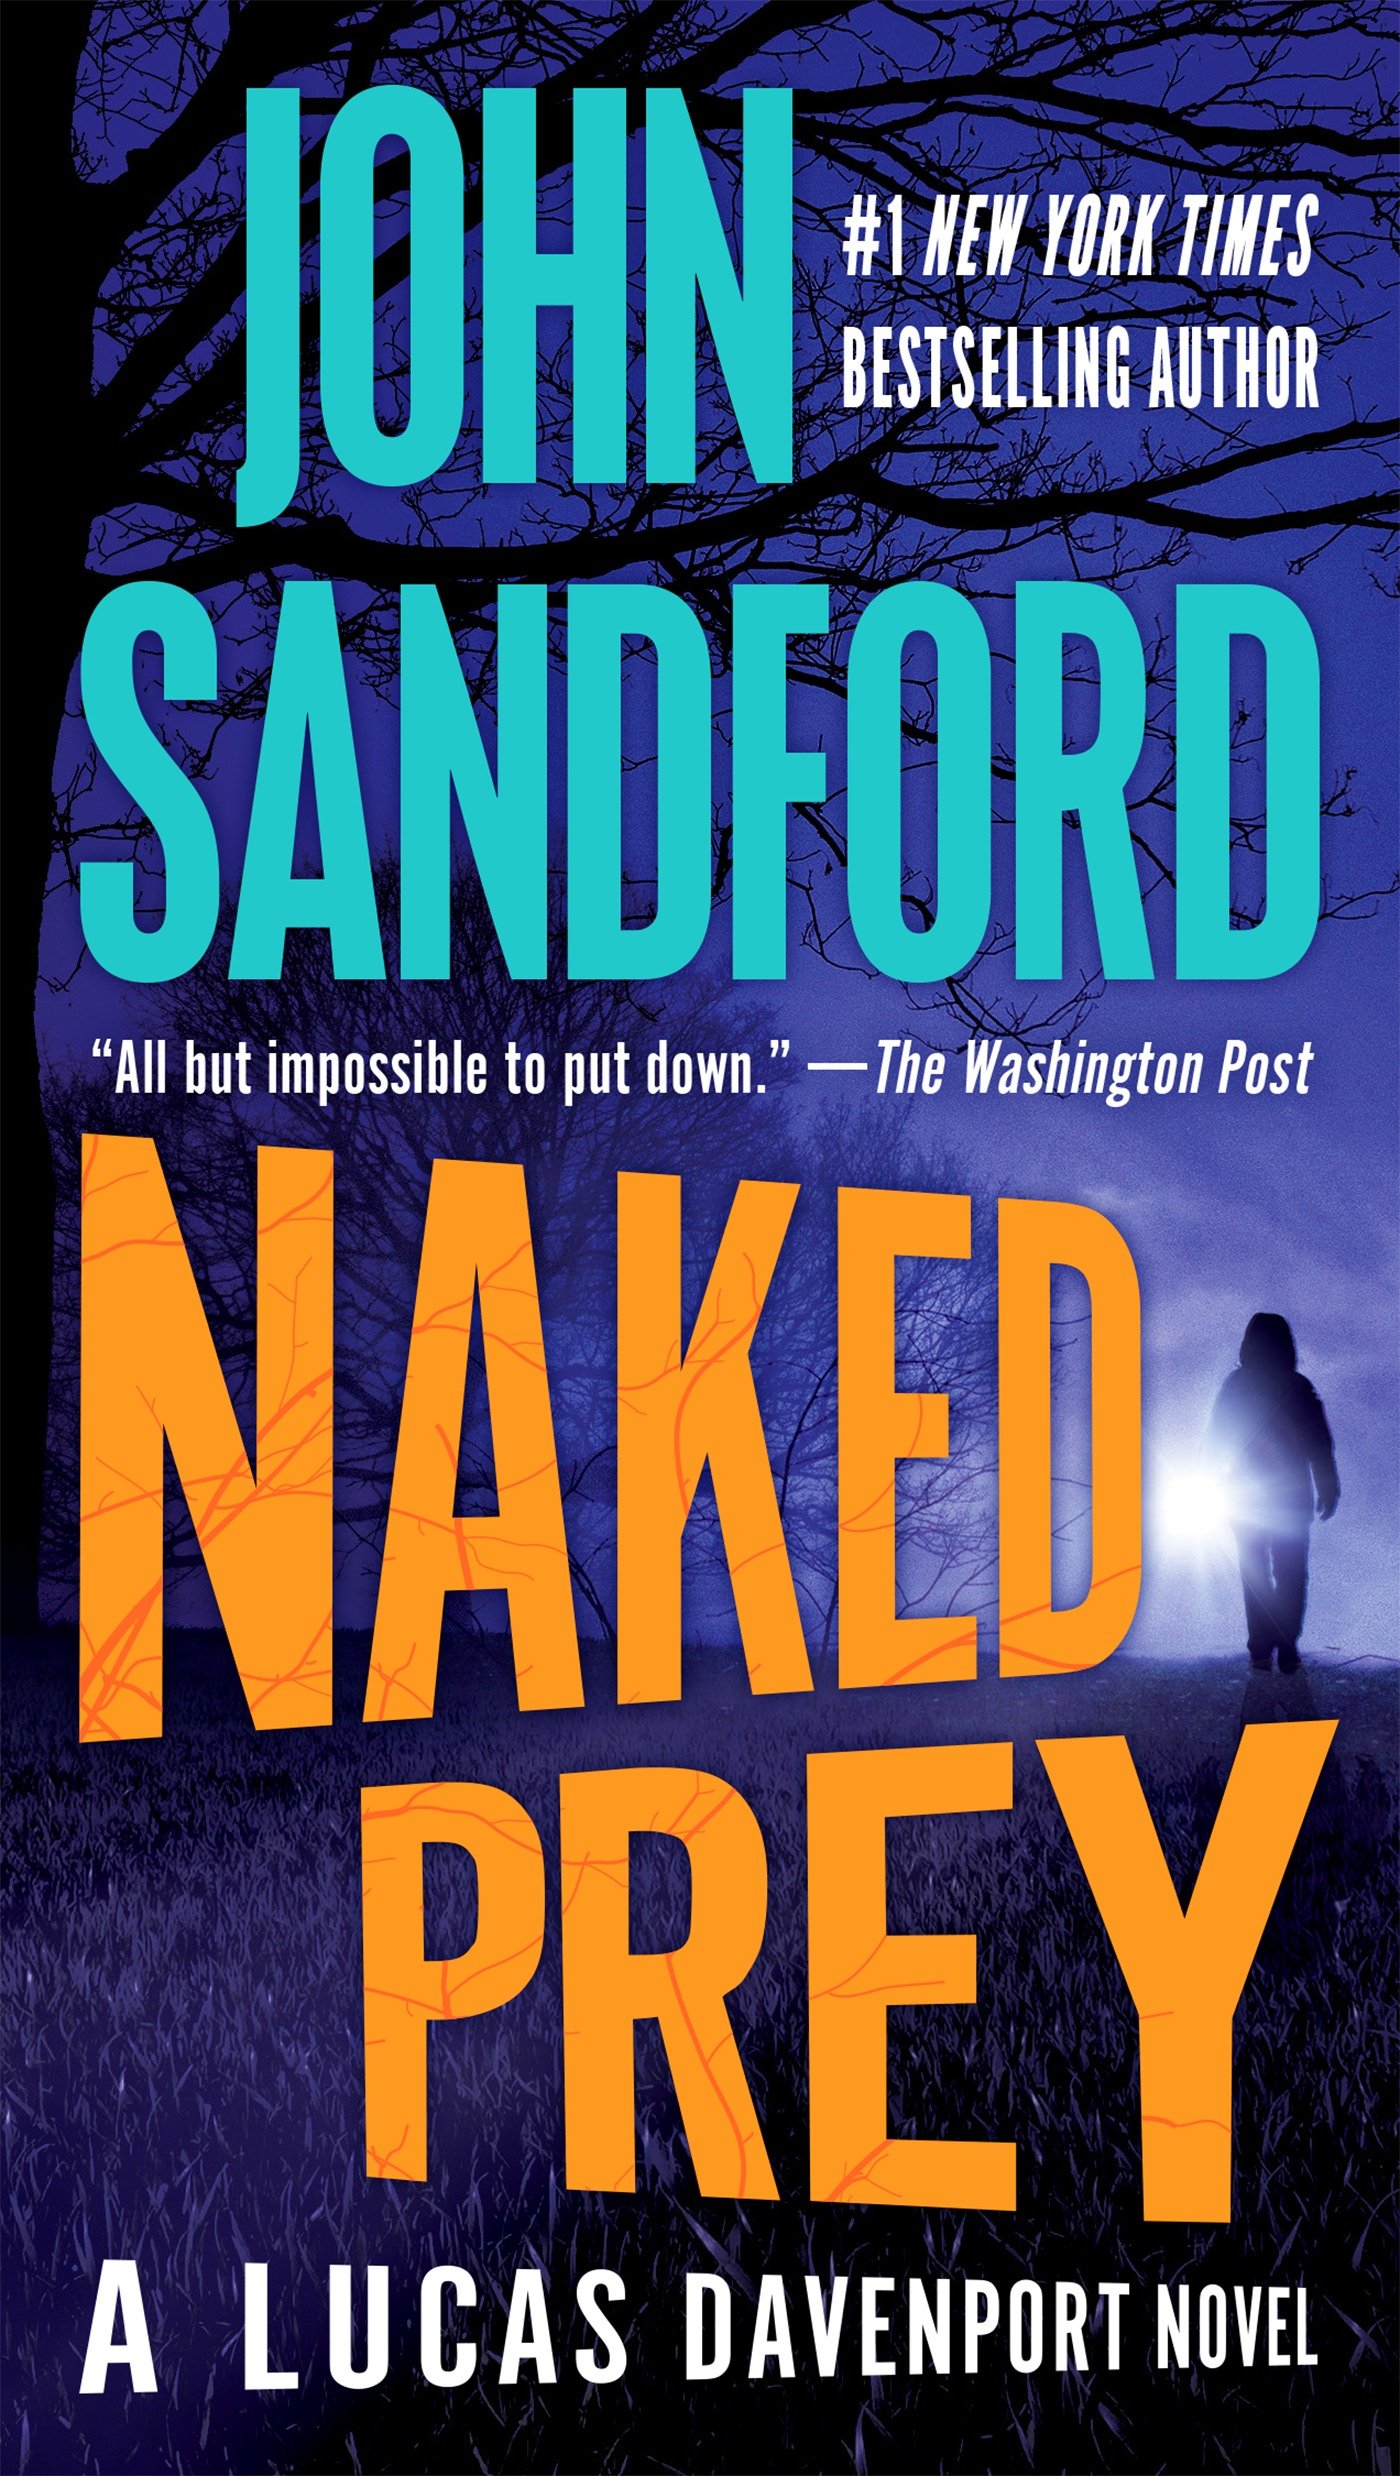 Naked Prey (The Prey Series Book 14)